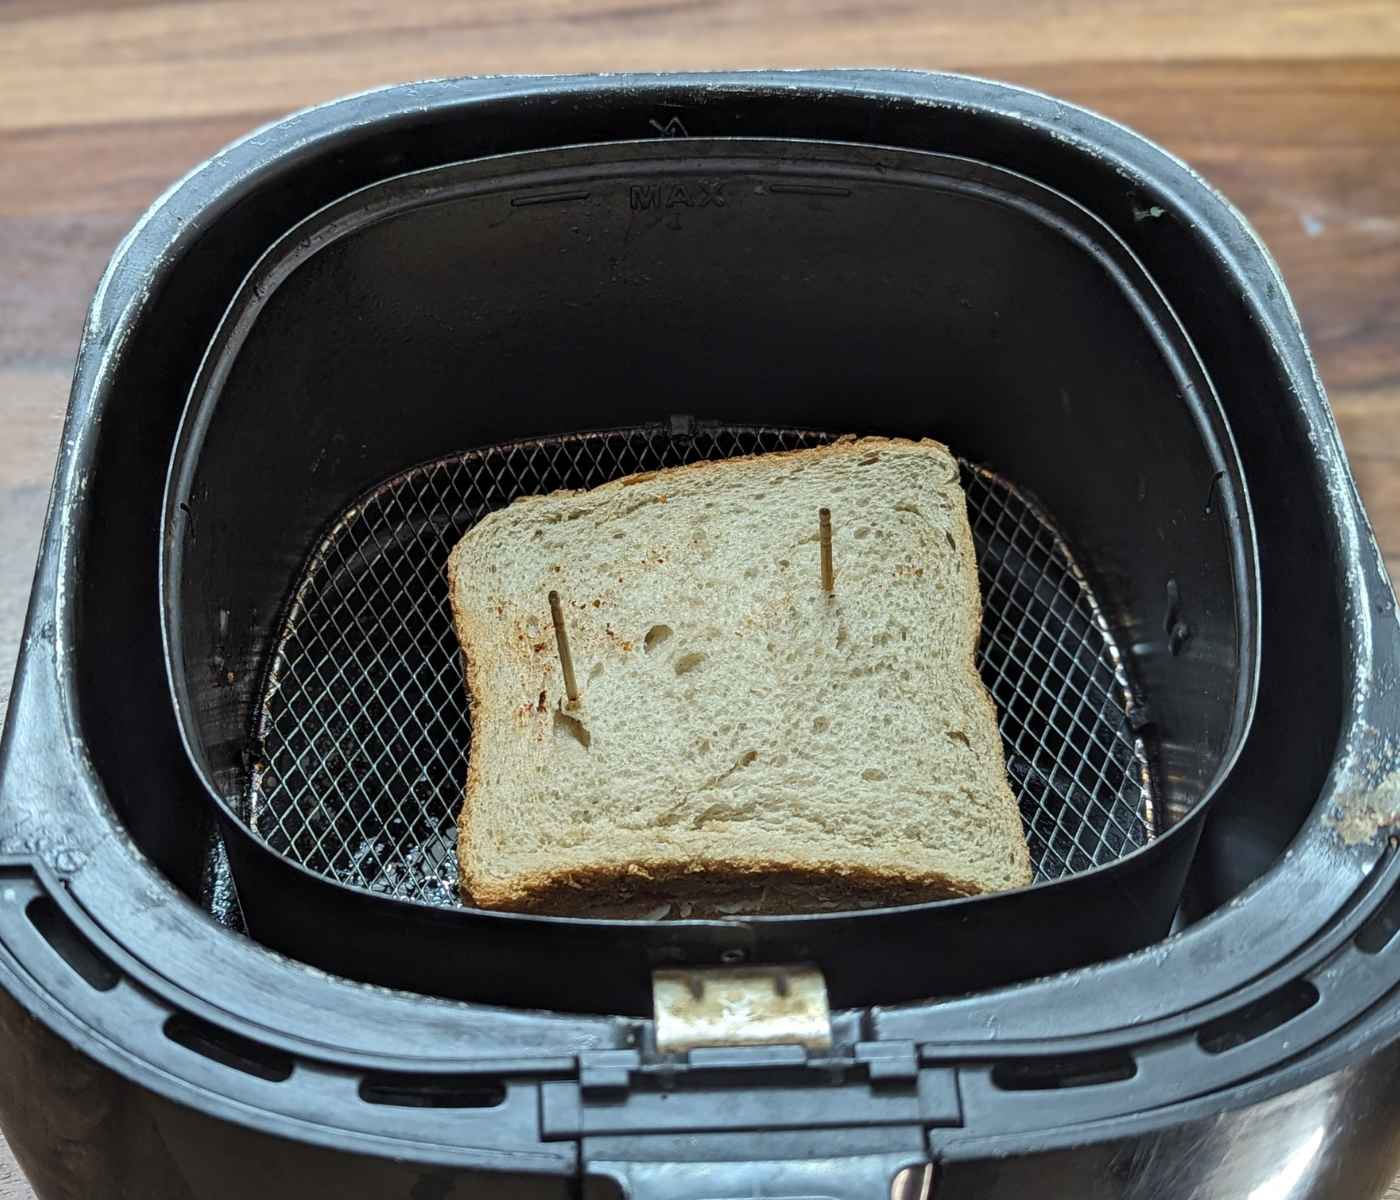 Sandwich placed in air fryer basket.